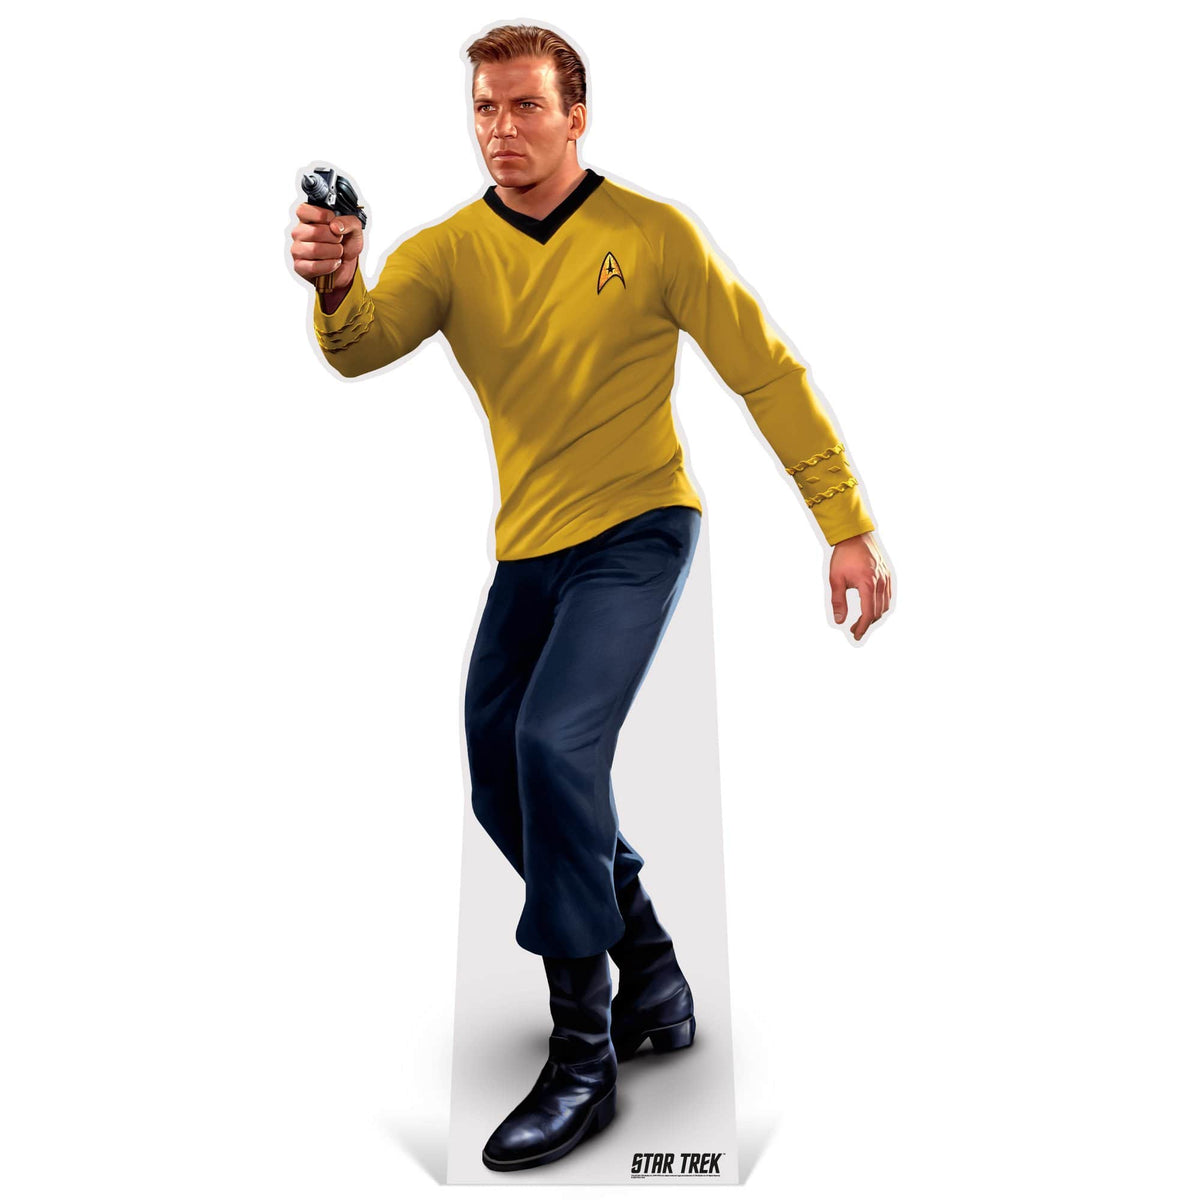  Star Trek Original Series Cardboard Cutouts, Life Size  Standups